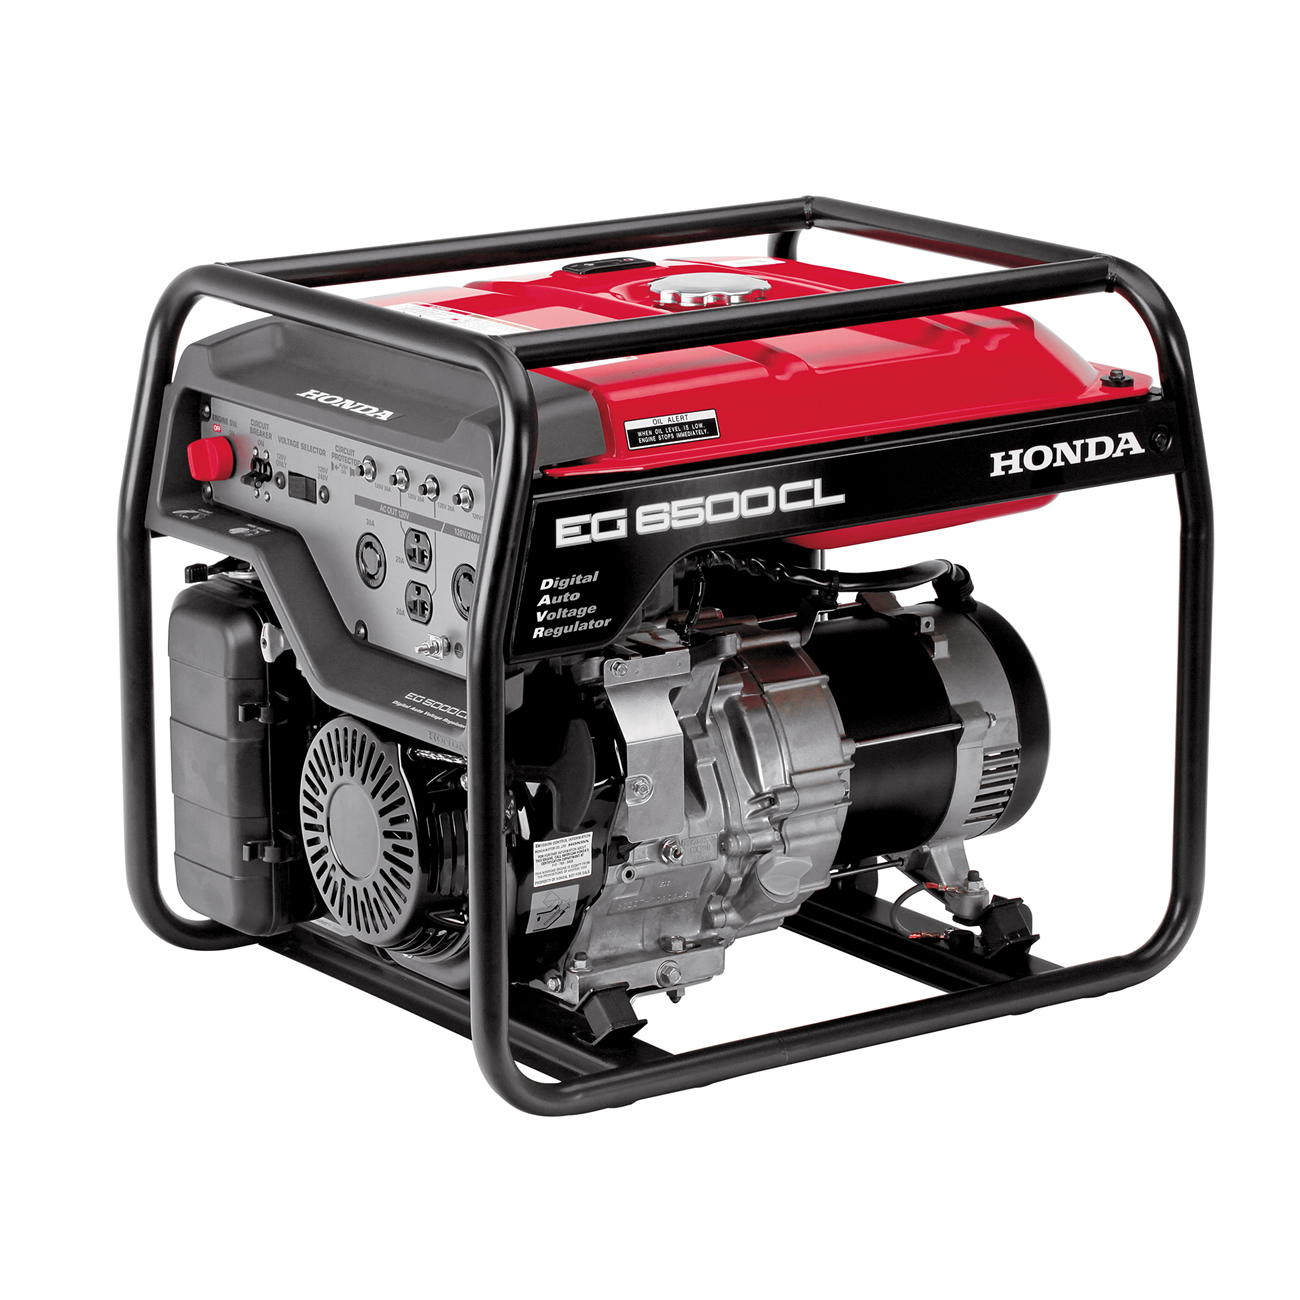 Factors To Consider When Choosing A Honda Power Generator